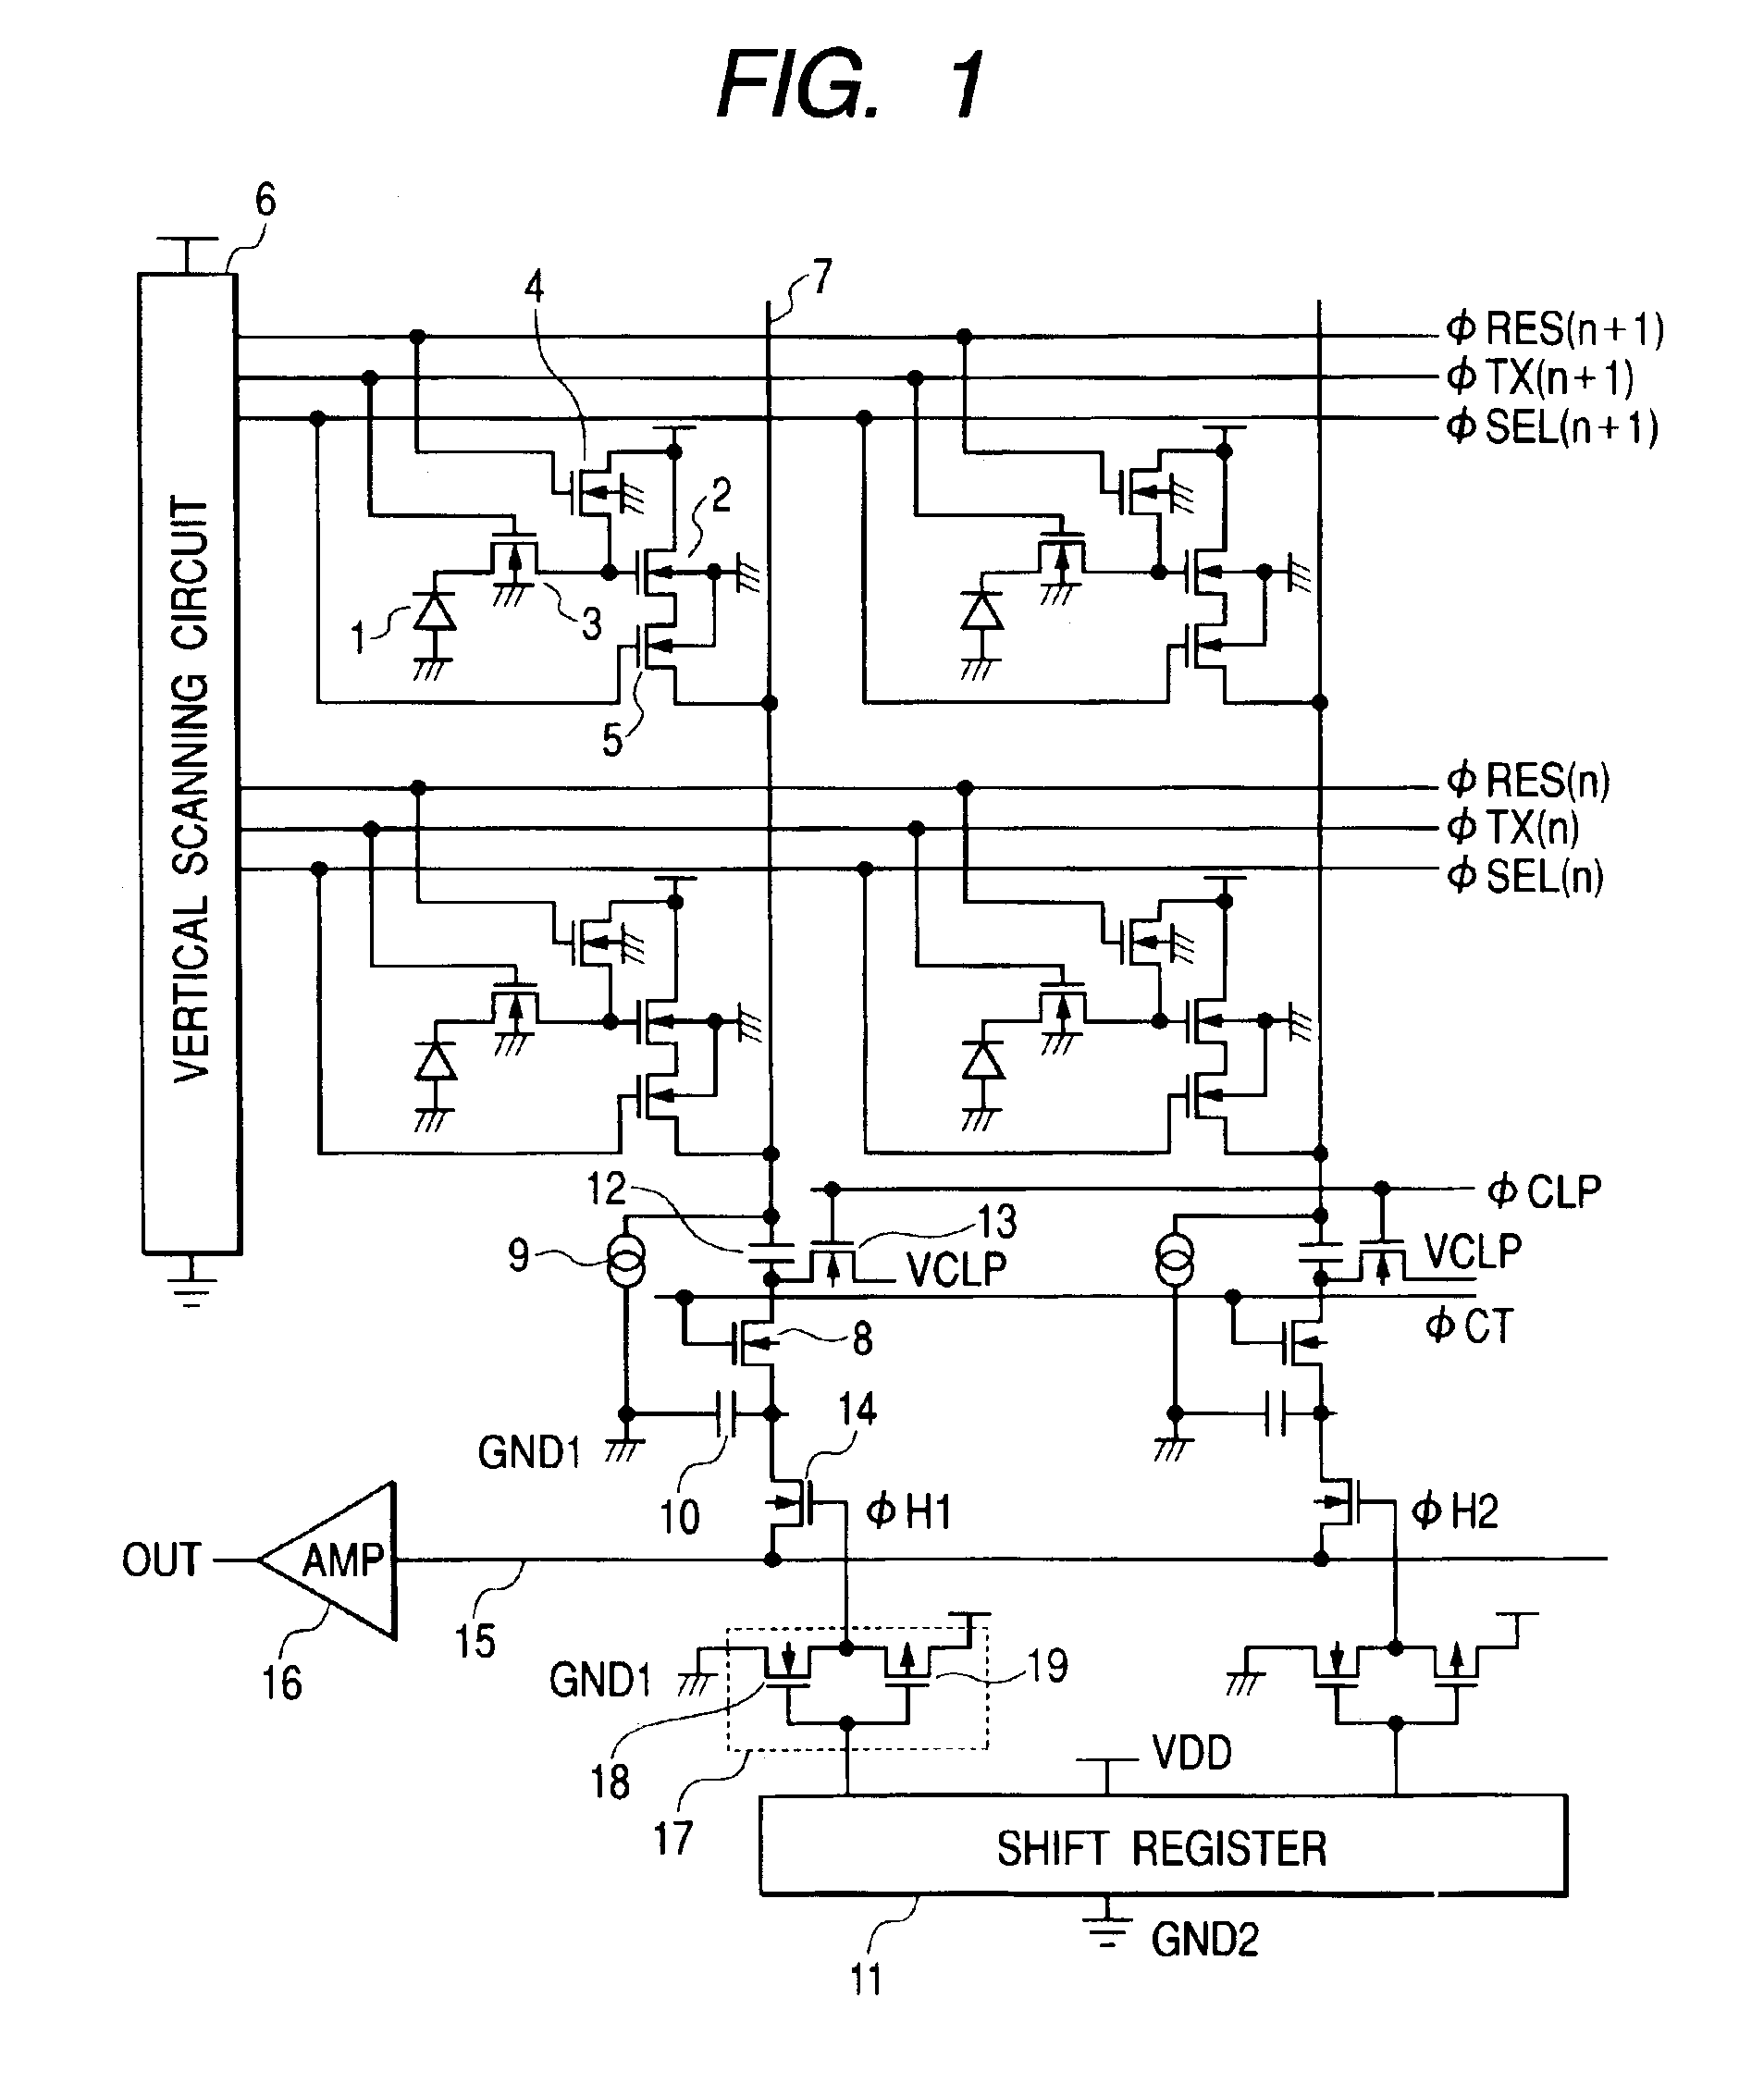 Photoelectric conversion device